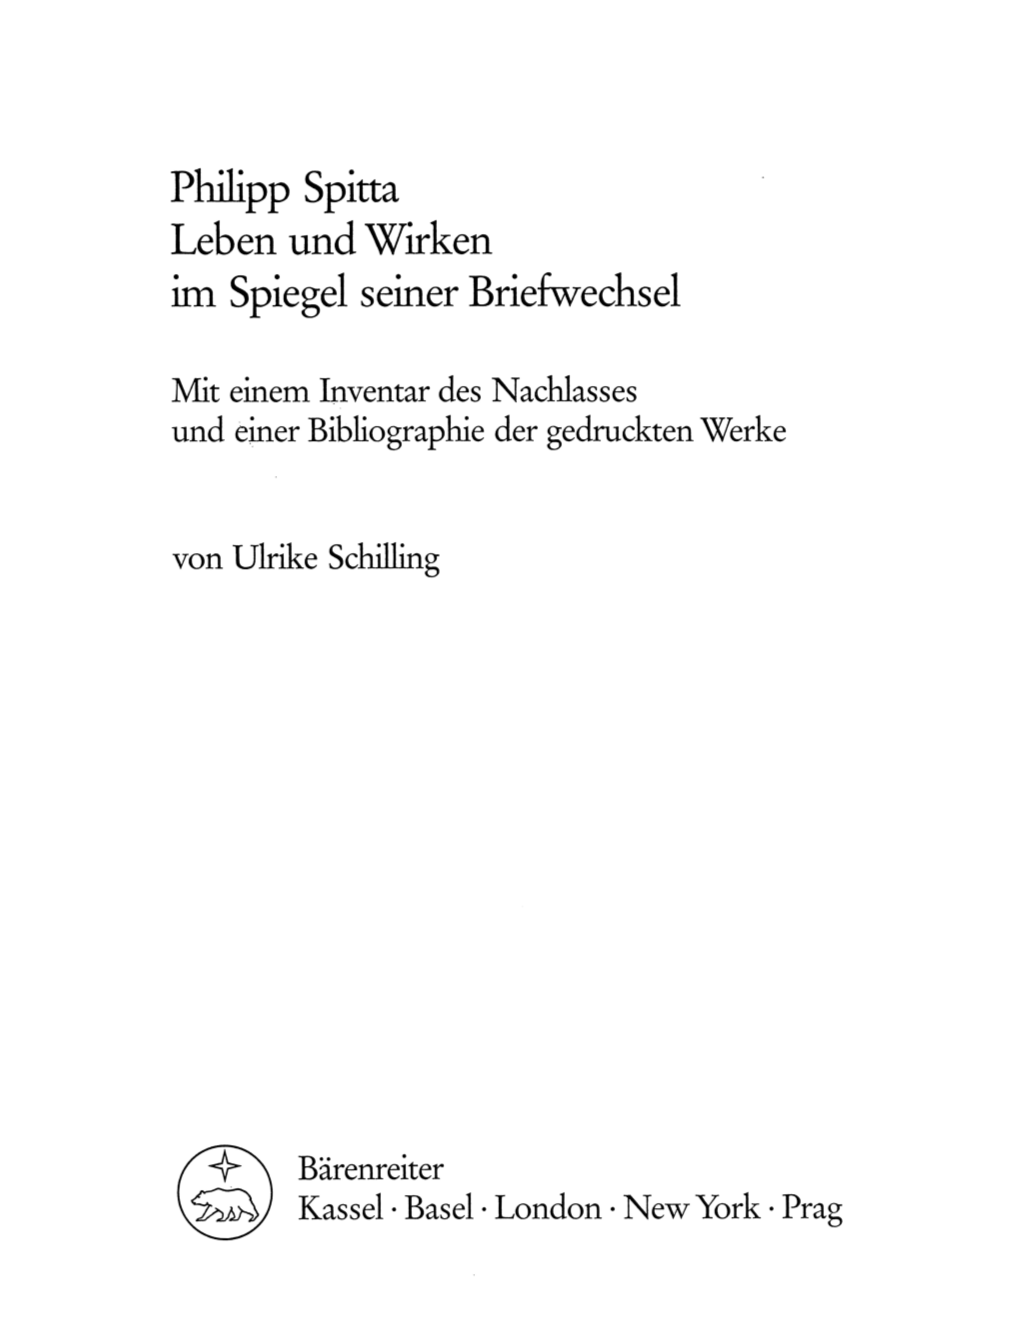 Dissertation Ulrike Schilling.Pdf